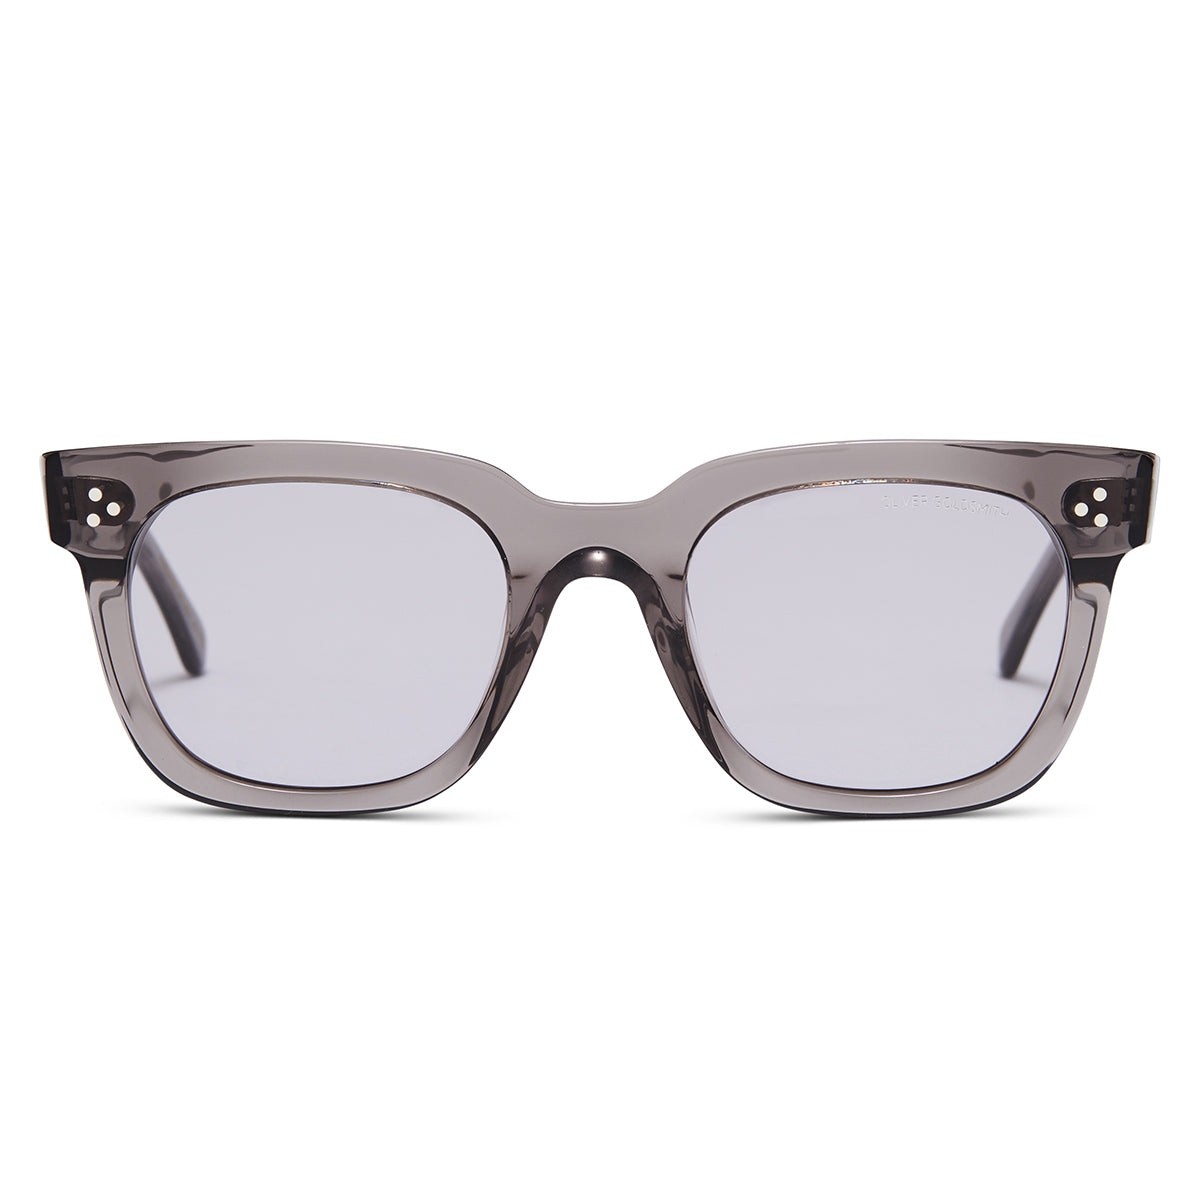 Rex WS Sunglasses with Rabbit acetate frame